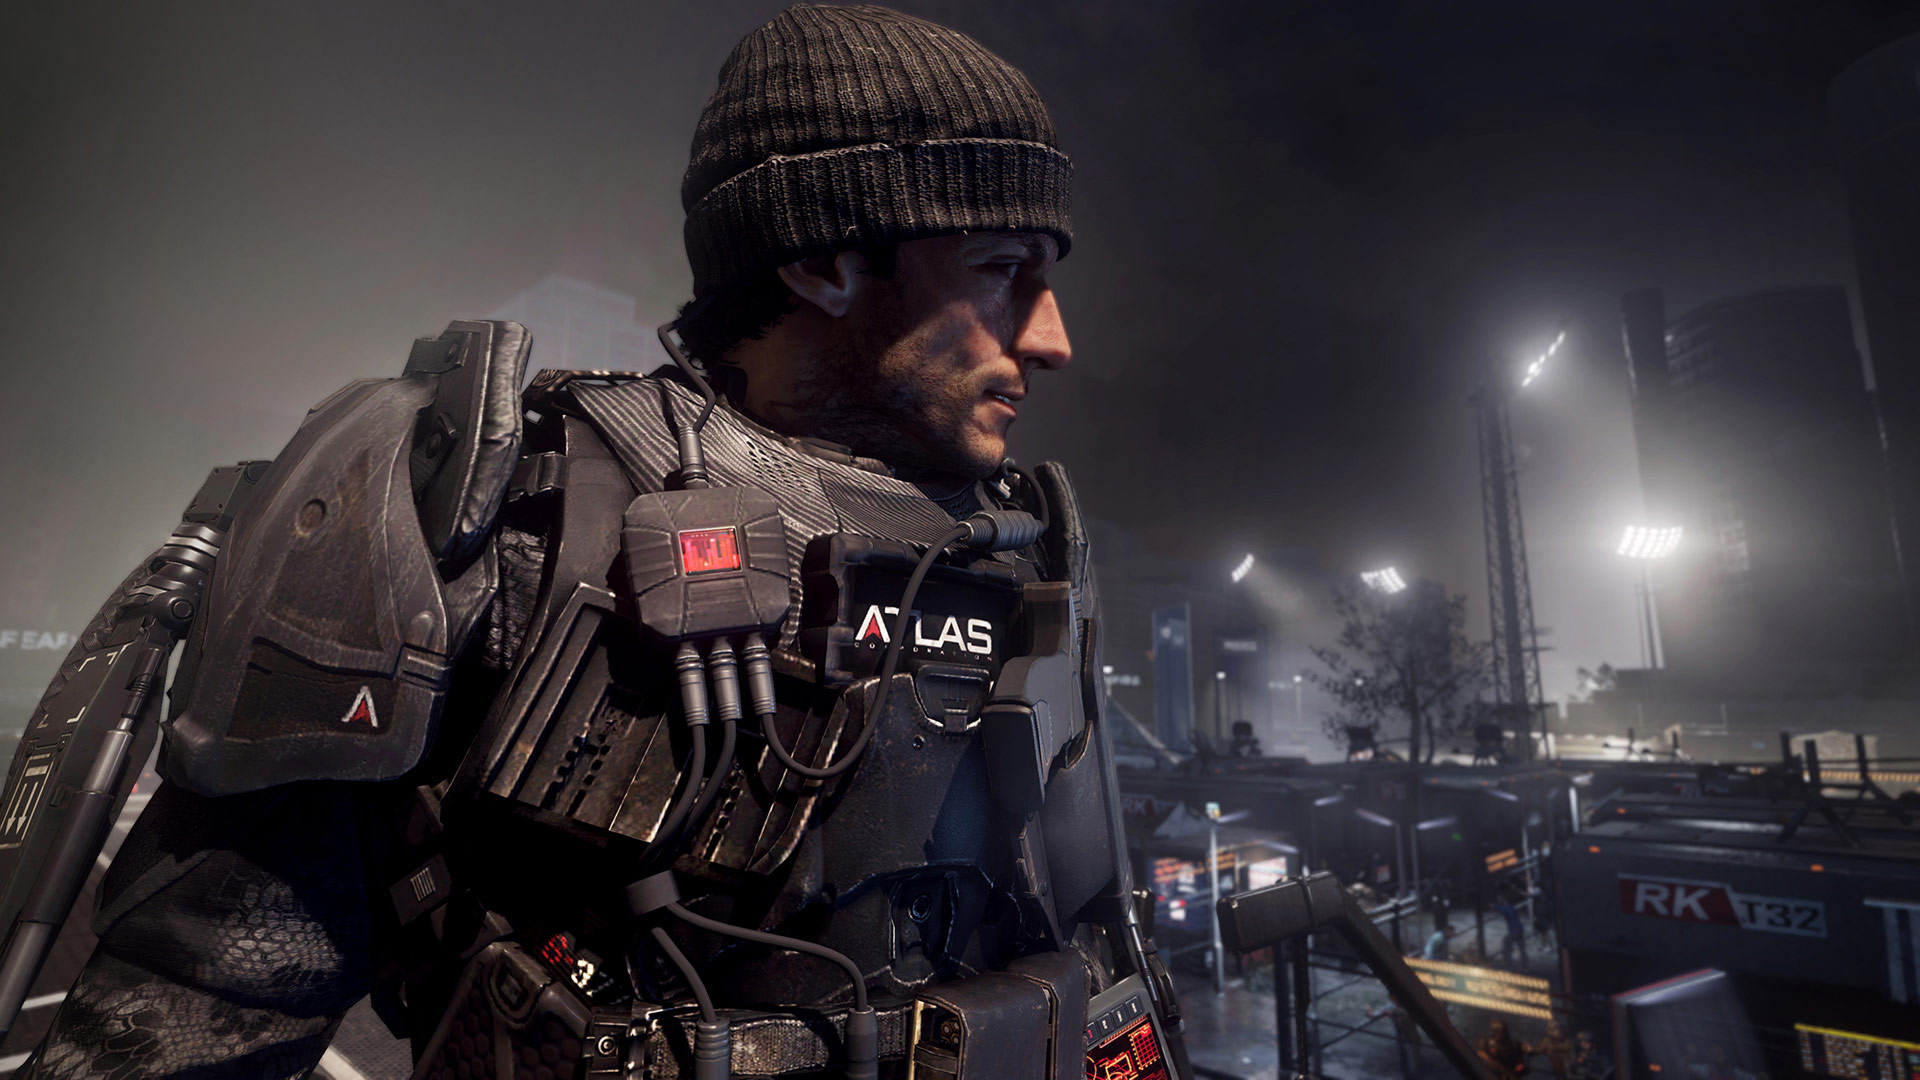 Buy Call of Duty Advanced Warfare Supremacy PS4 Compare Prices